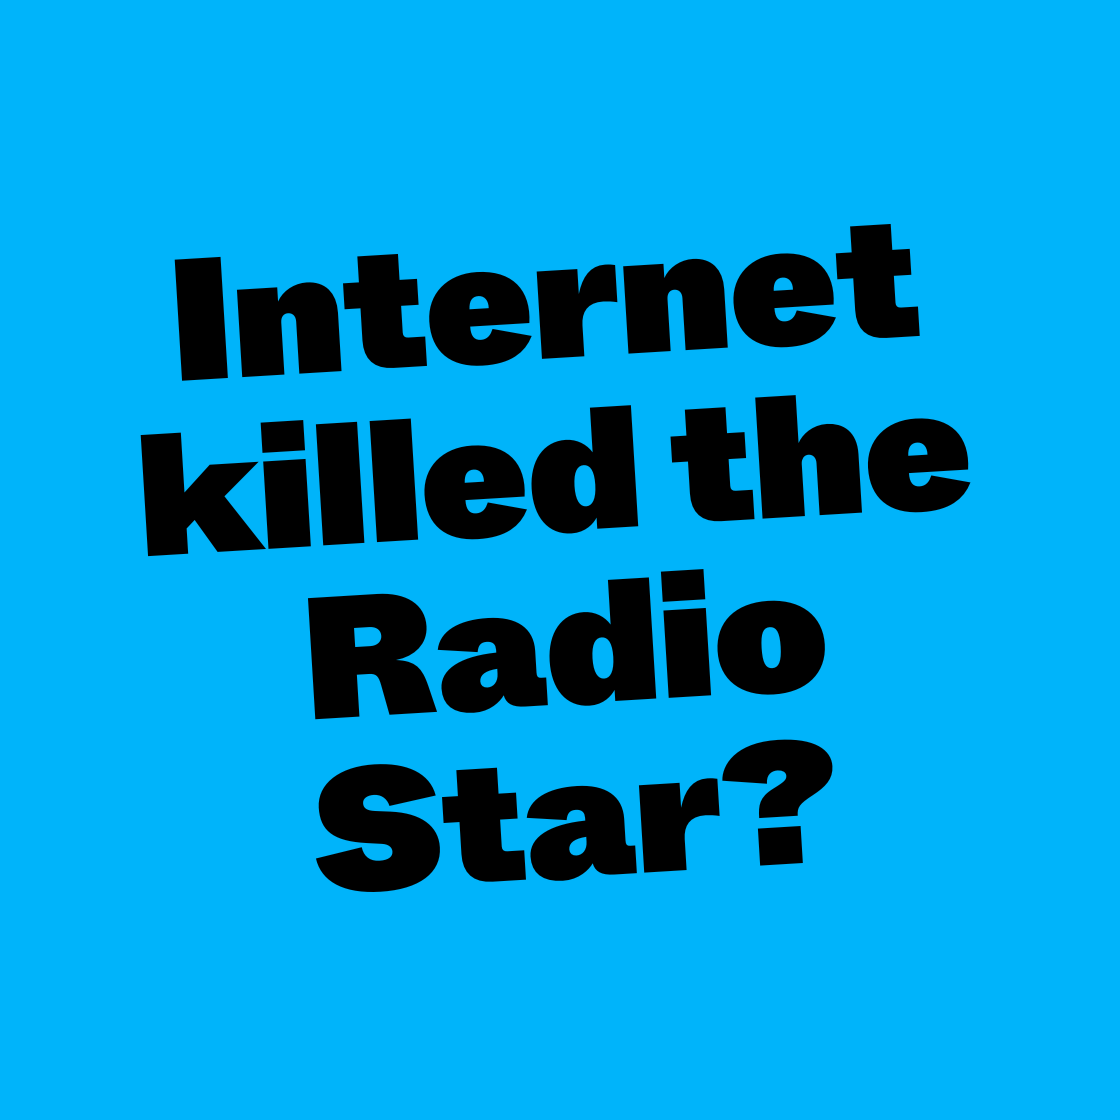 Internet killed the Radio Star?